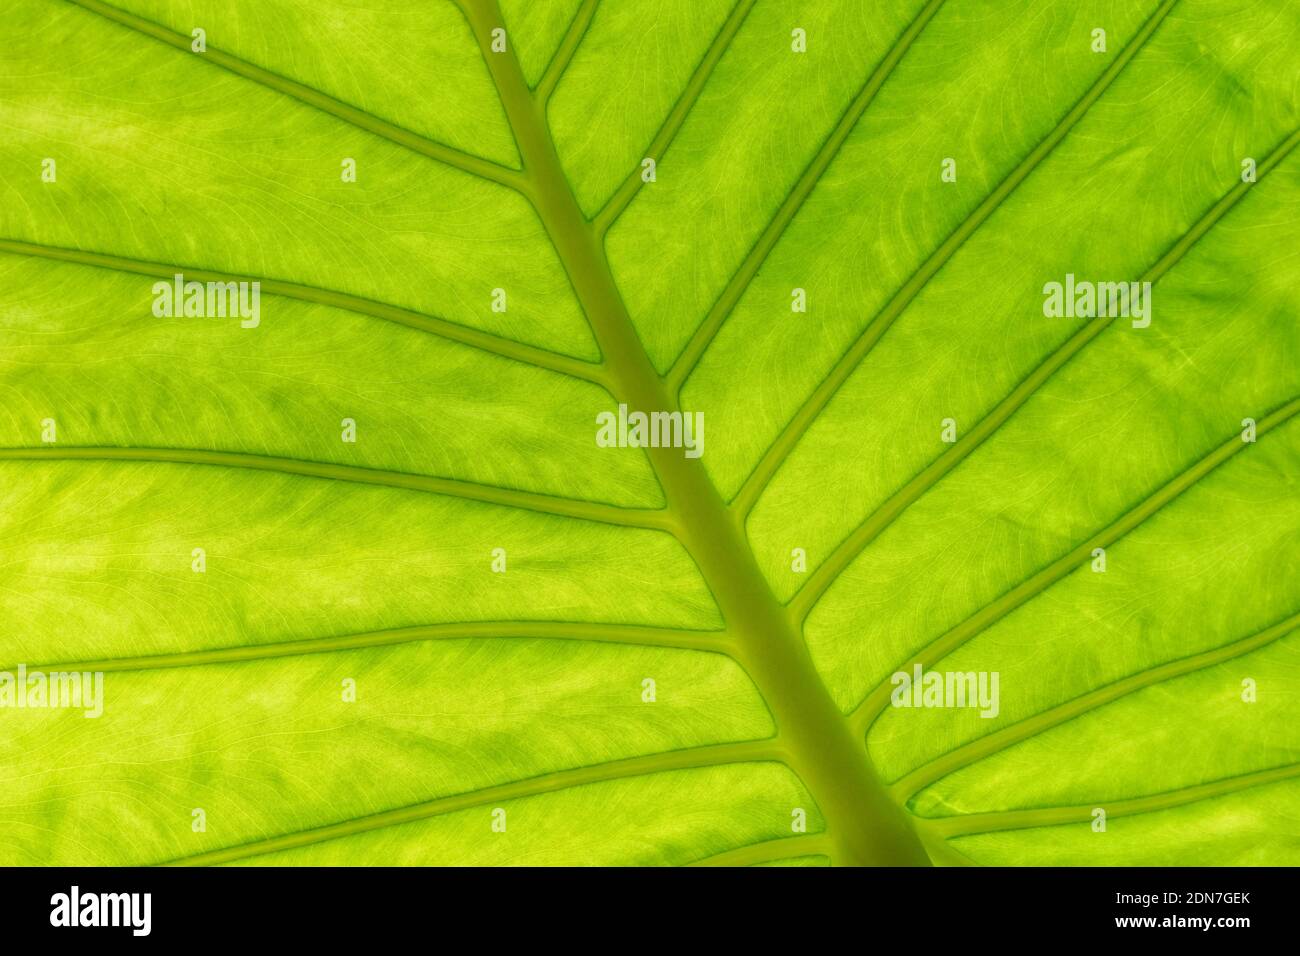 Hinten beleuchtetes grünes Blatt, Nahaufnahme Textur Hintergrund Stockfoto